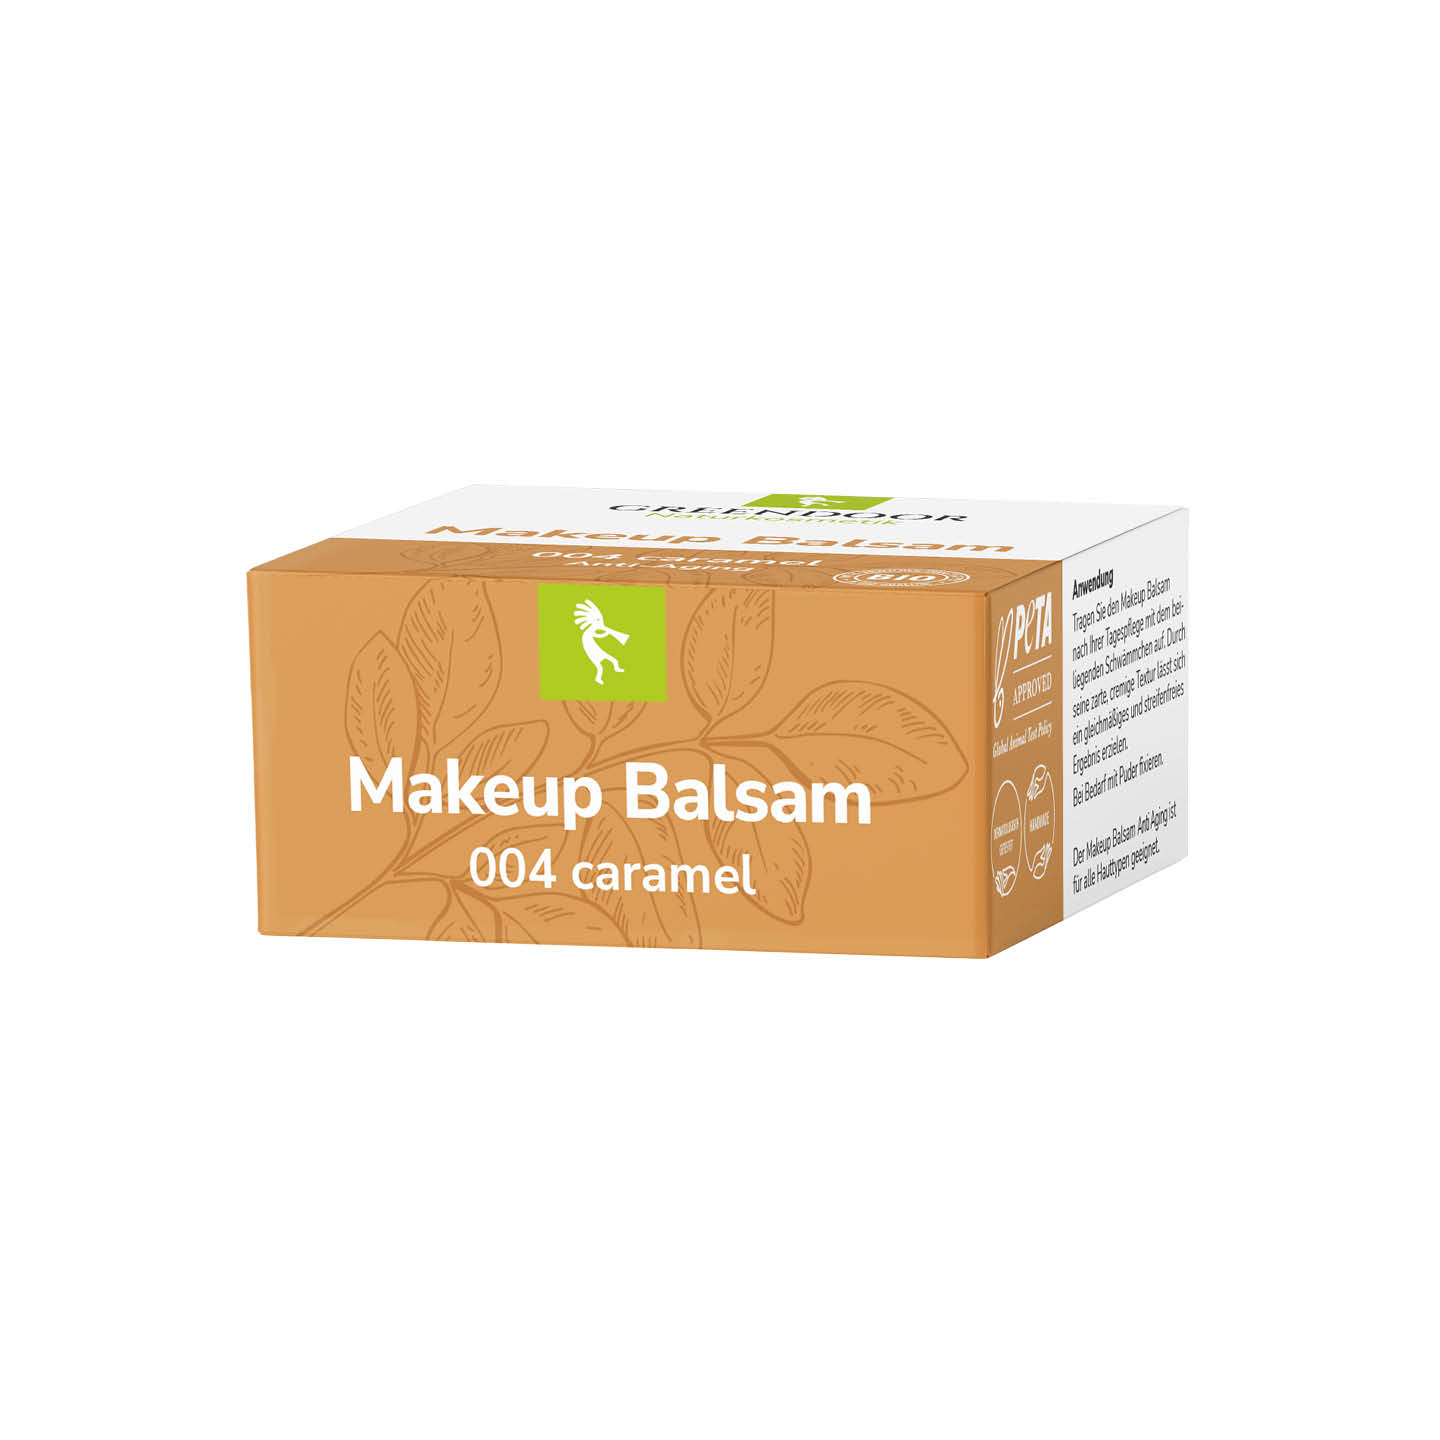 Makeup Balsam Anti Aging - 004 caramel, Kompakt Make-up 25g